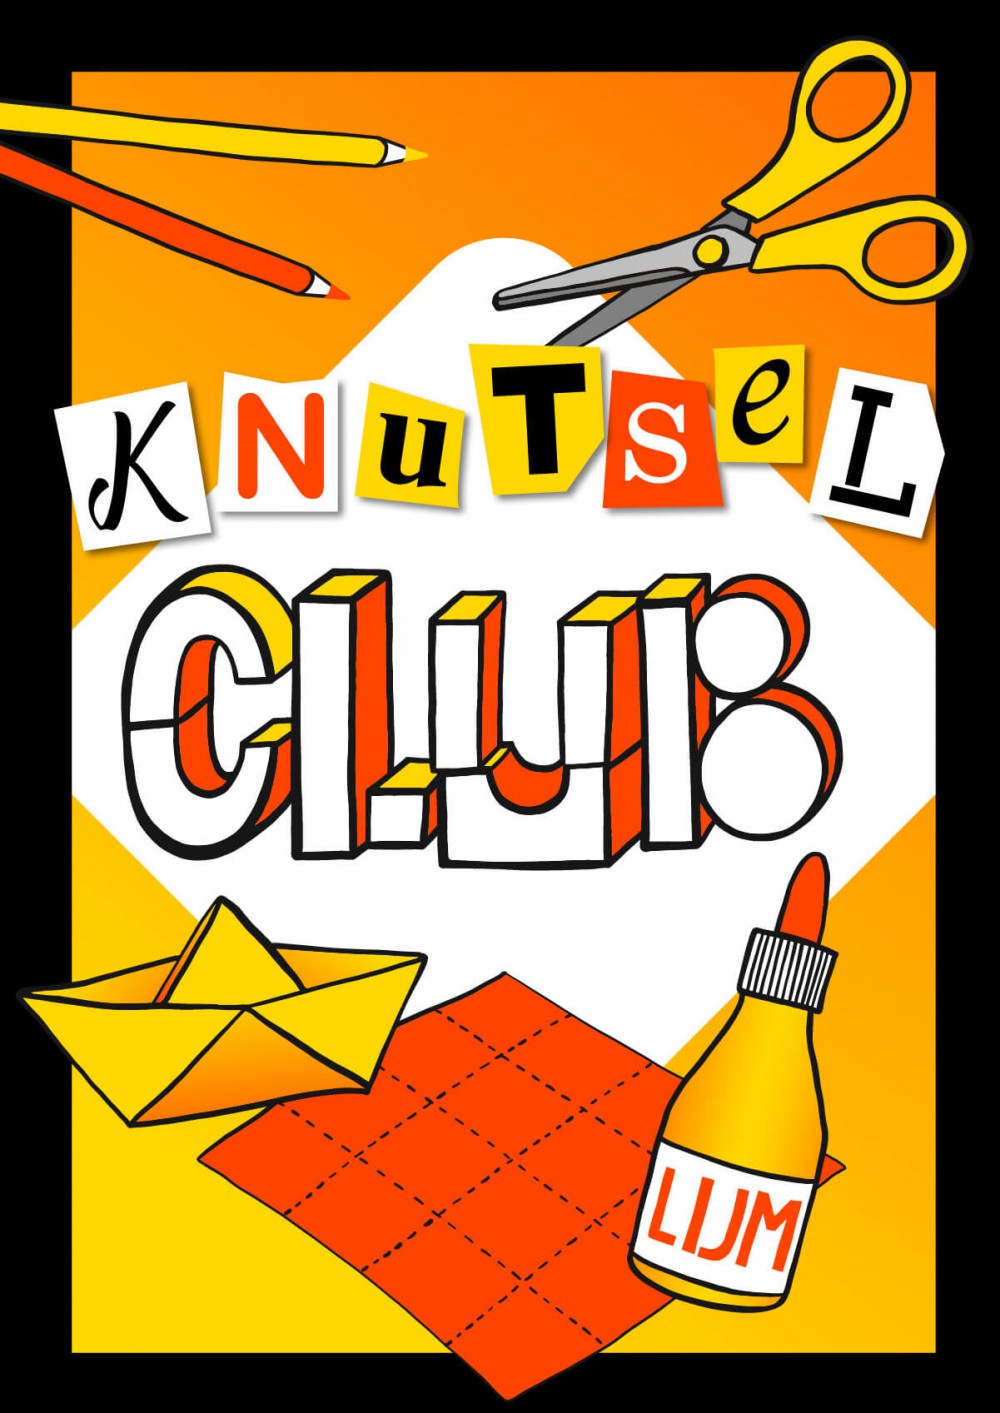 Knutselclub